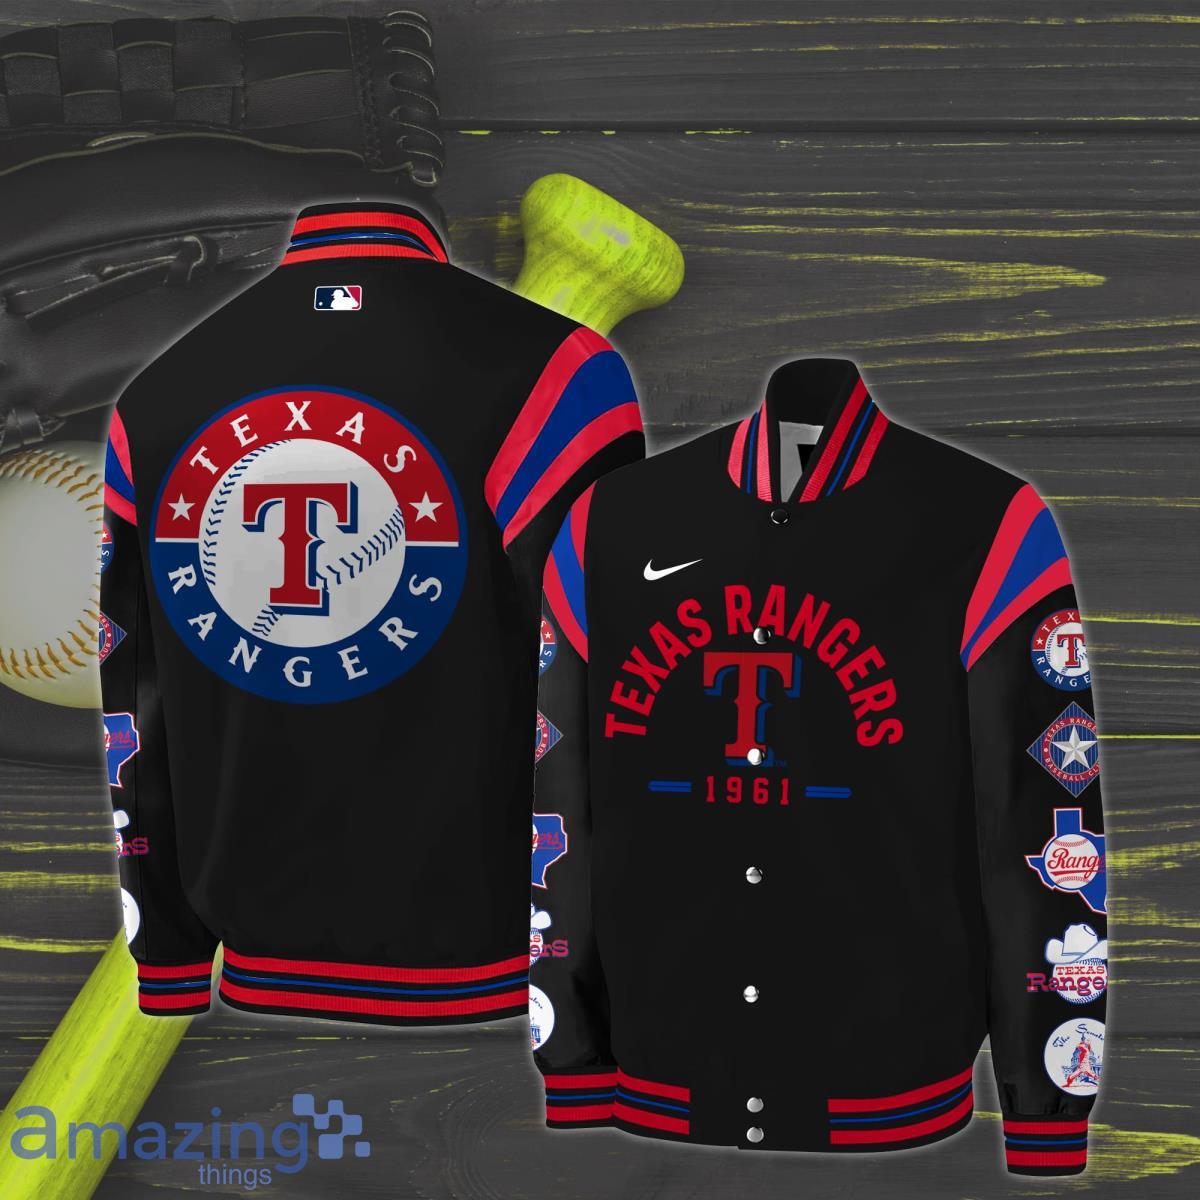 Shirts, Starter Texas Rangers Vintage Baseball Jersey